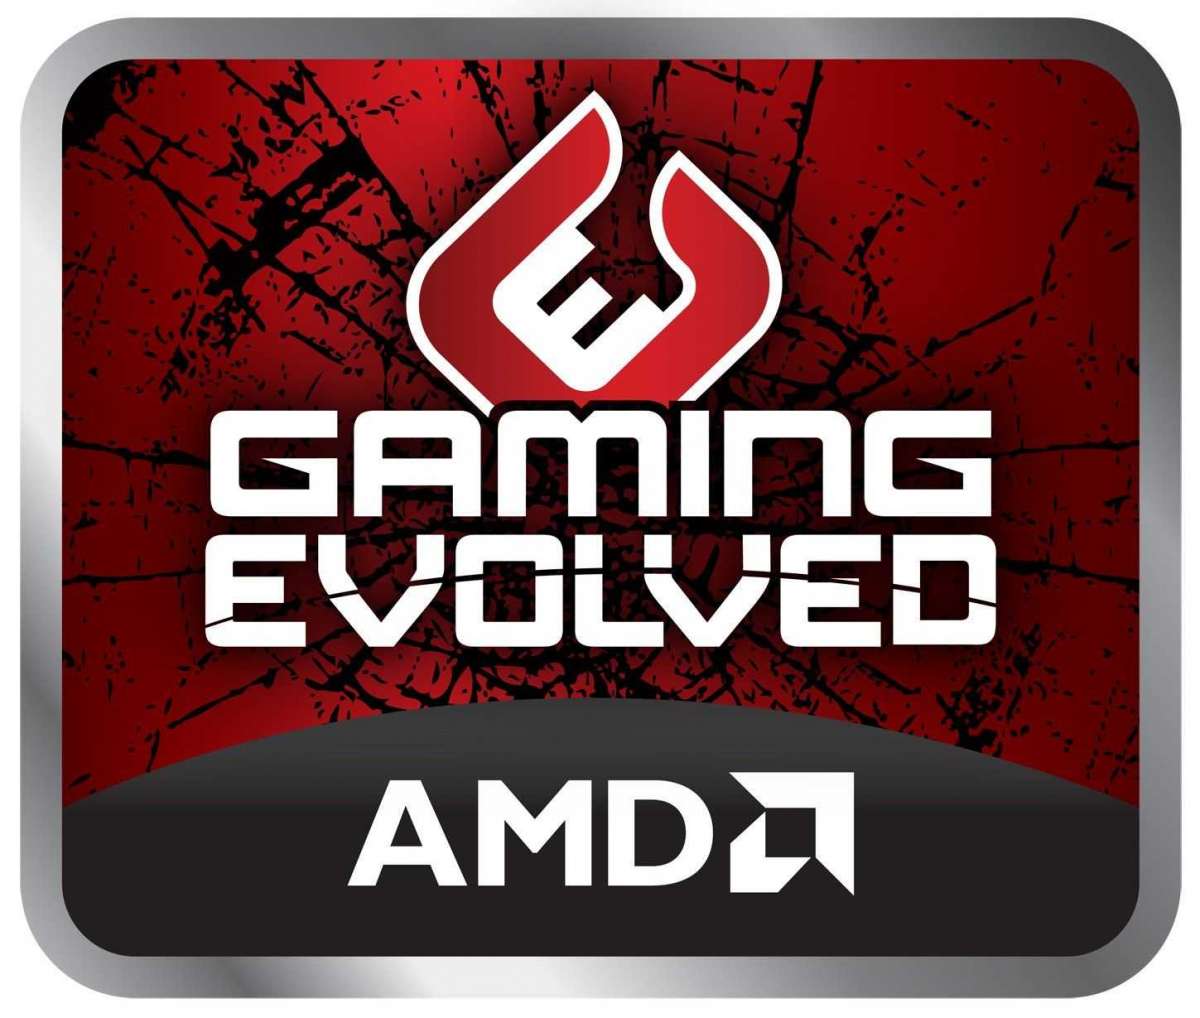 AMD Gaming Evolved logo